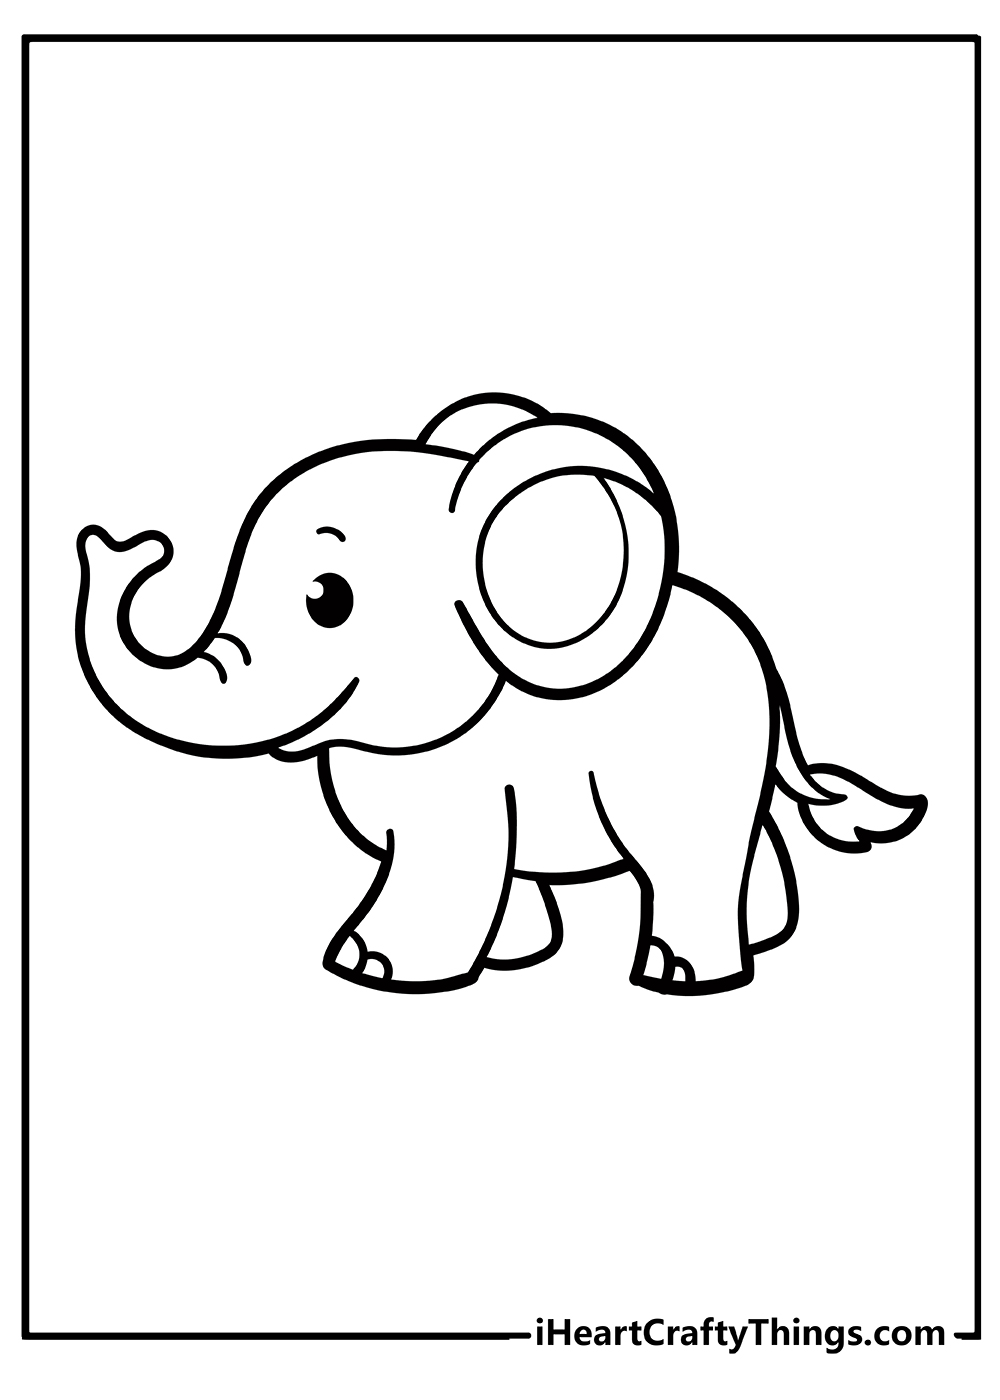 Elephant Coloring Original Sheet for children free download